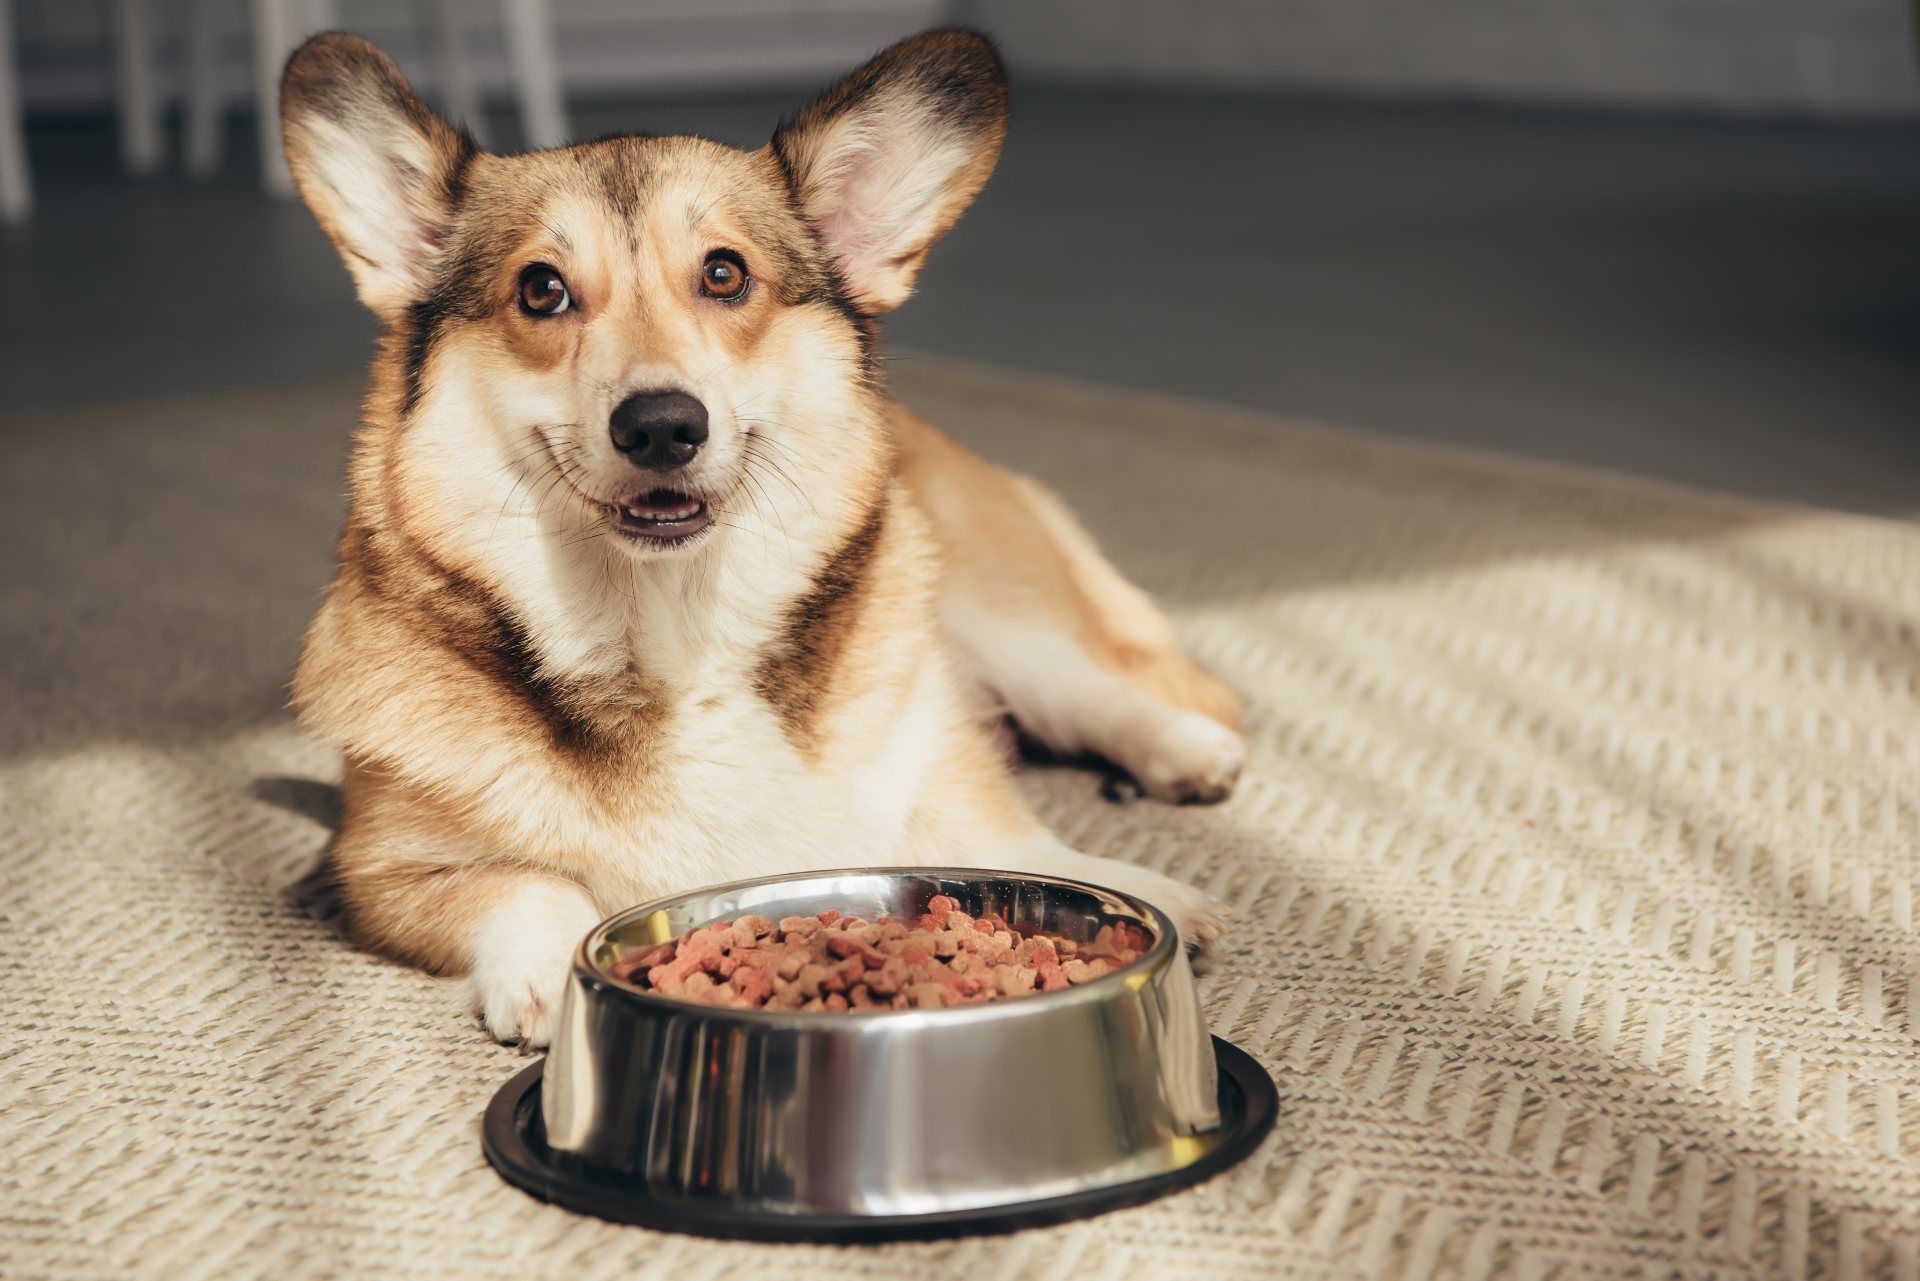 A Corgi lies near a bowl of pet food